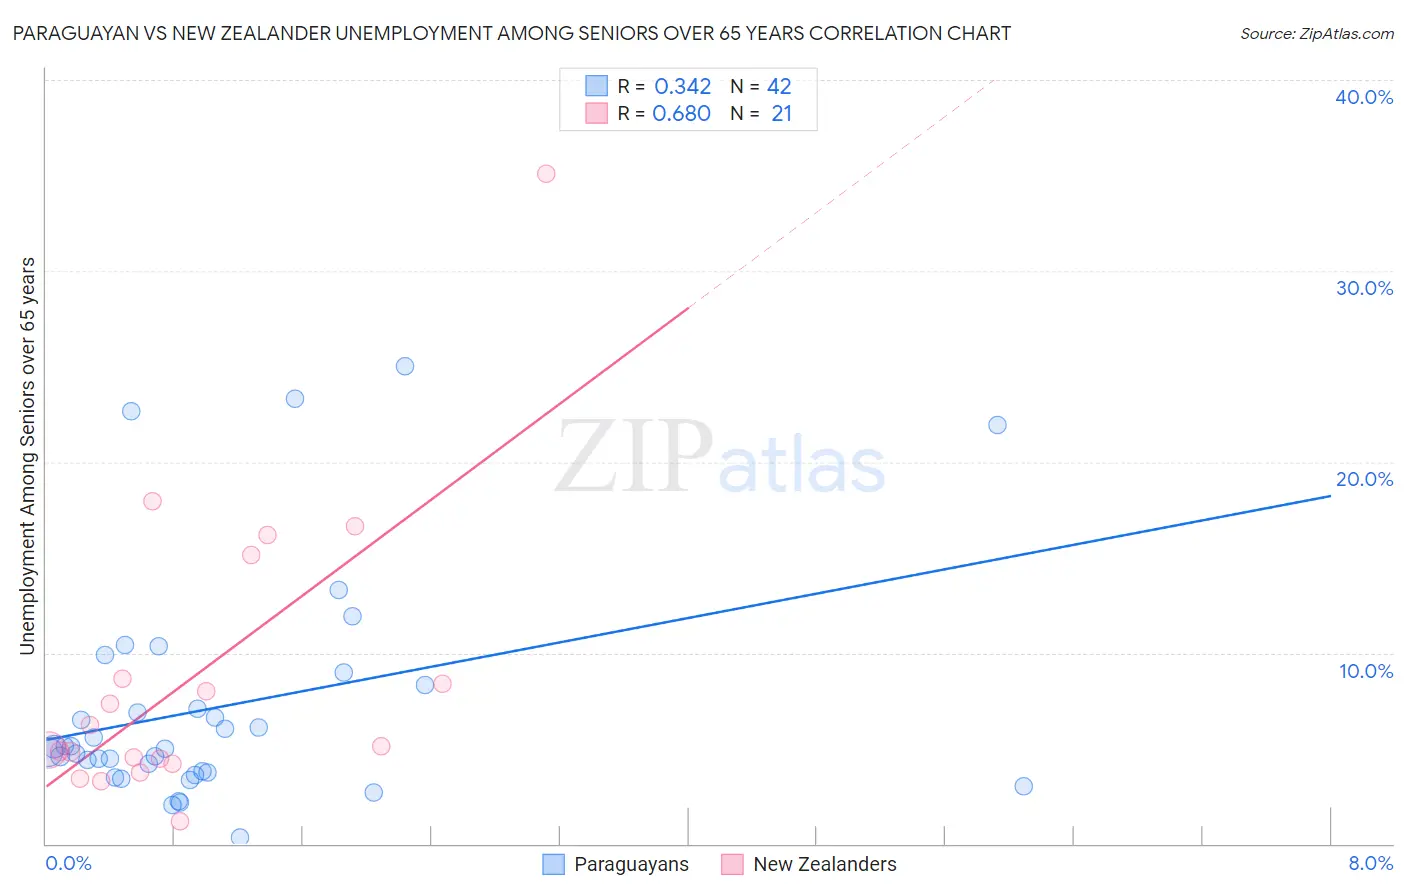 Paraguayan vs New Zealander Unemployment Among Seniors over 65 years